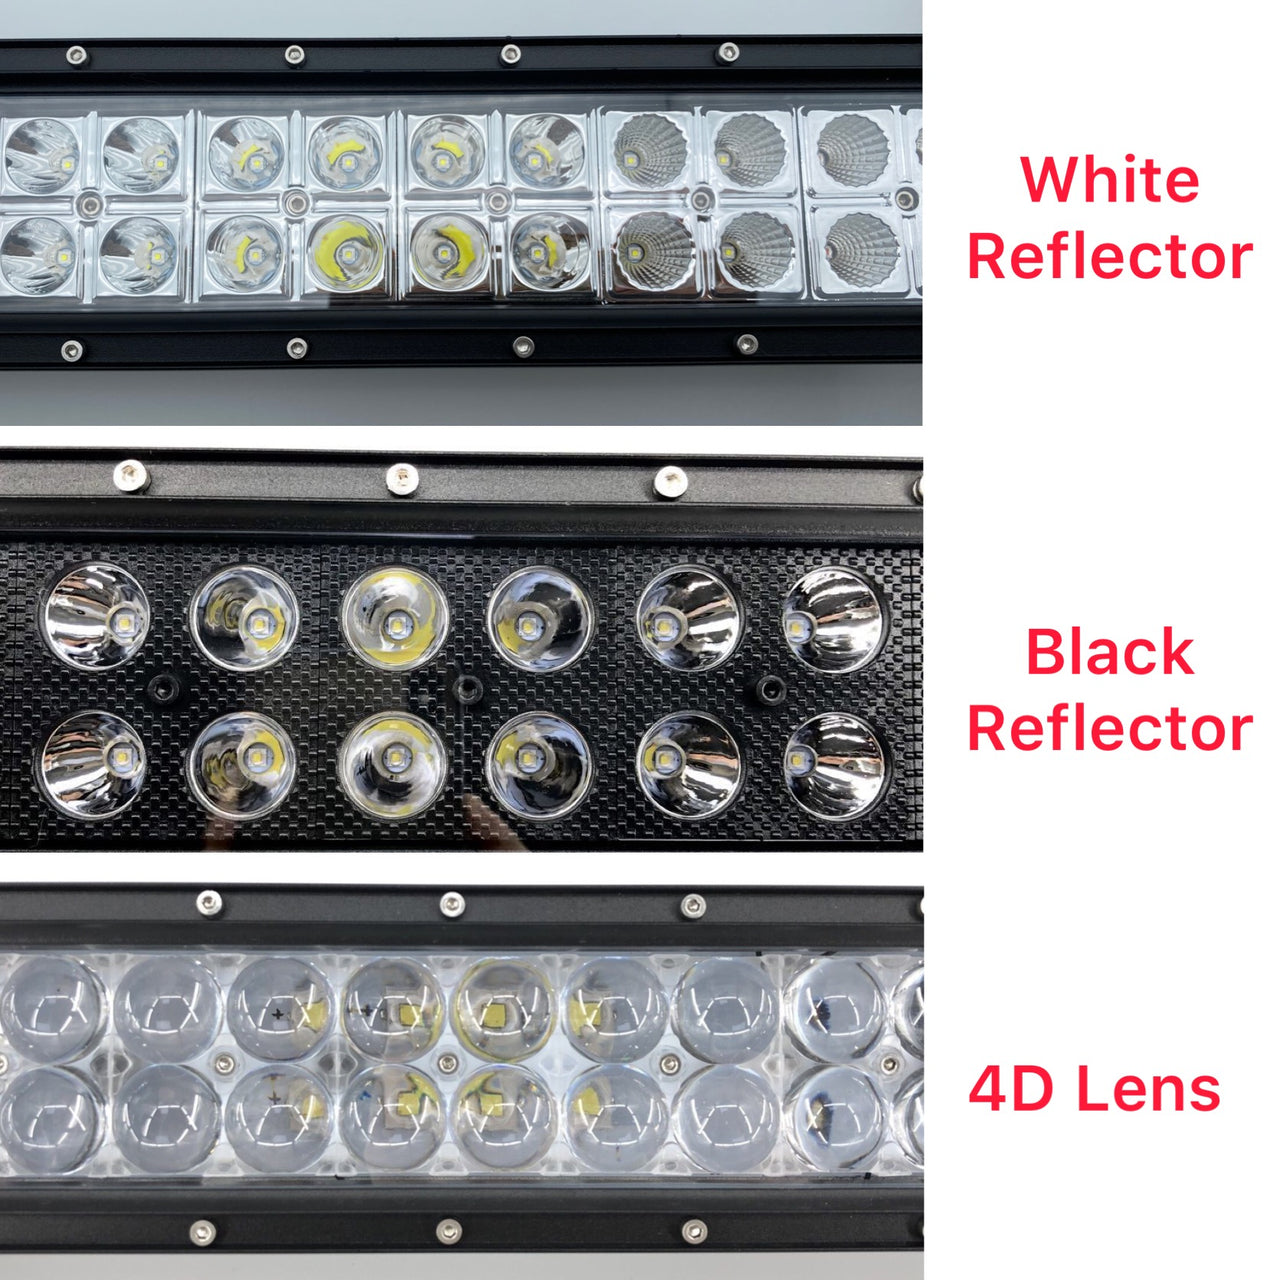 Durite 0-420-89 16 x 5W CREE LED Flood Light Bar with Lead - 12V